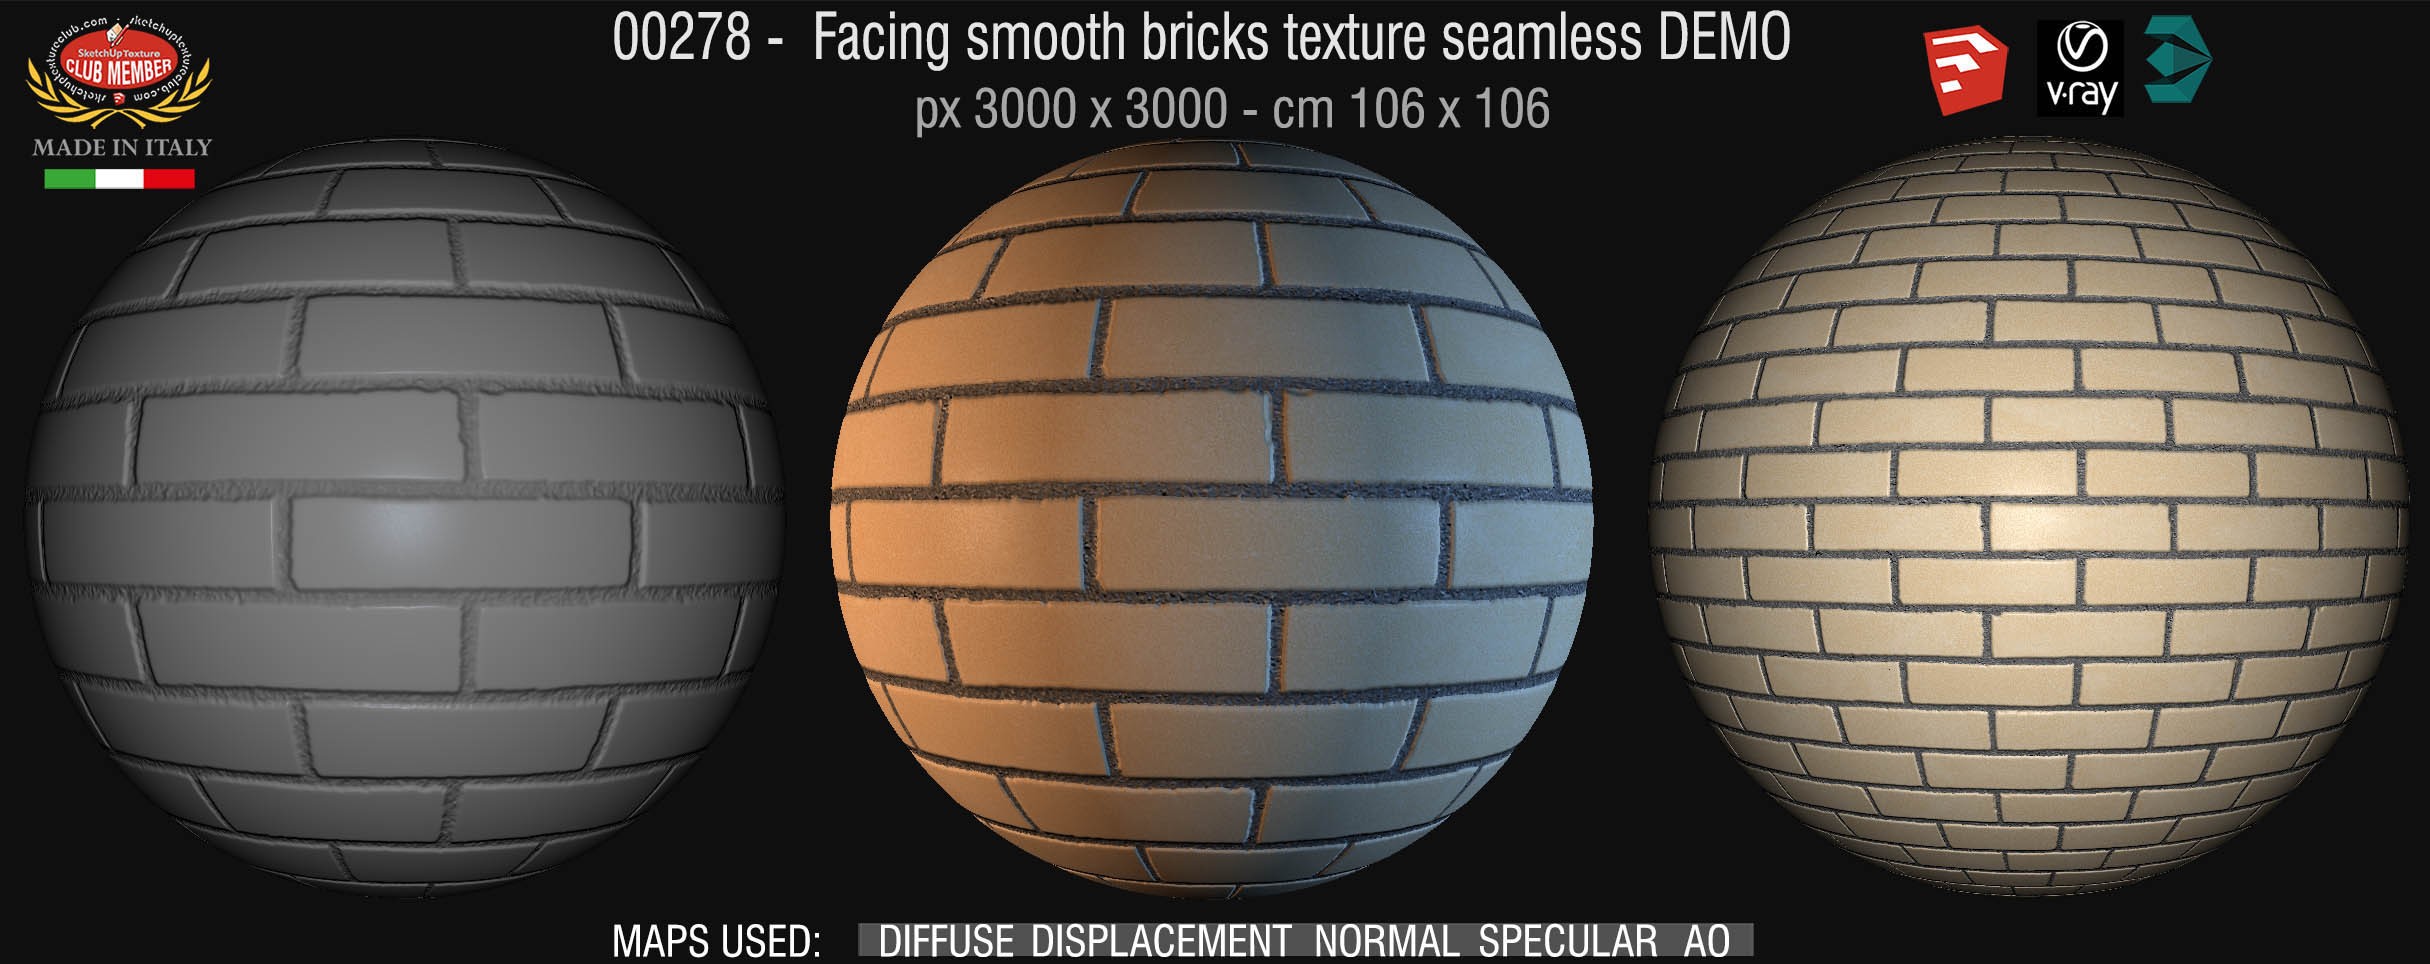 00278 Facing smooth bricks texture seamless + maps DEMO